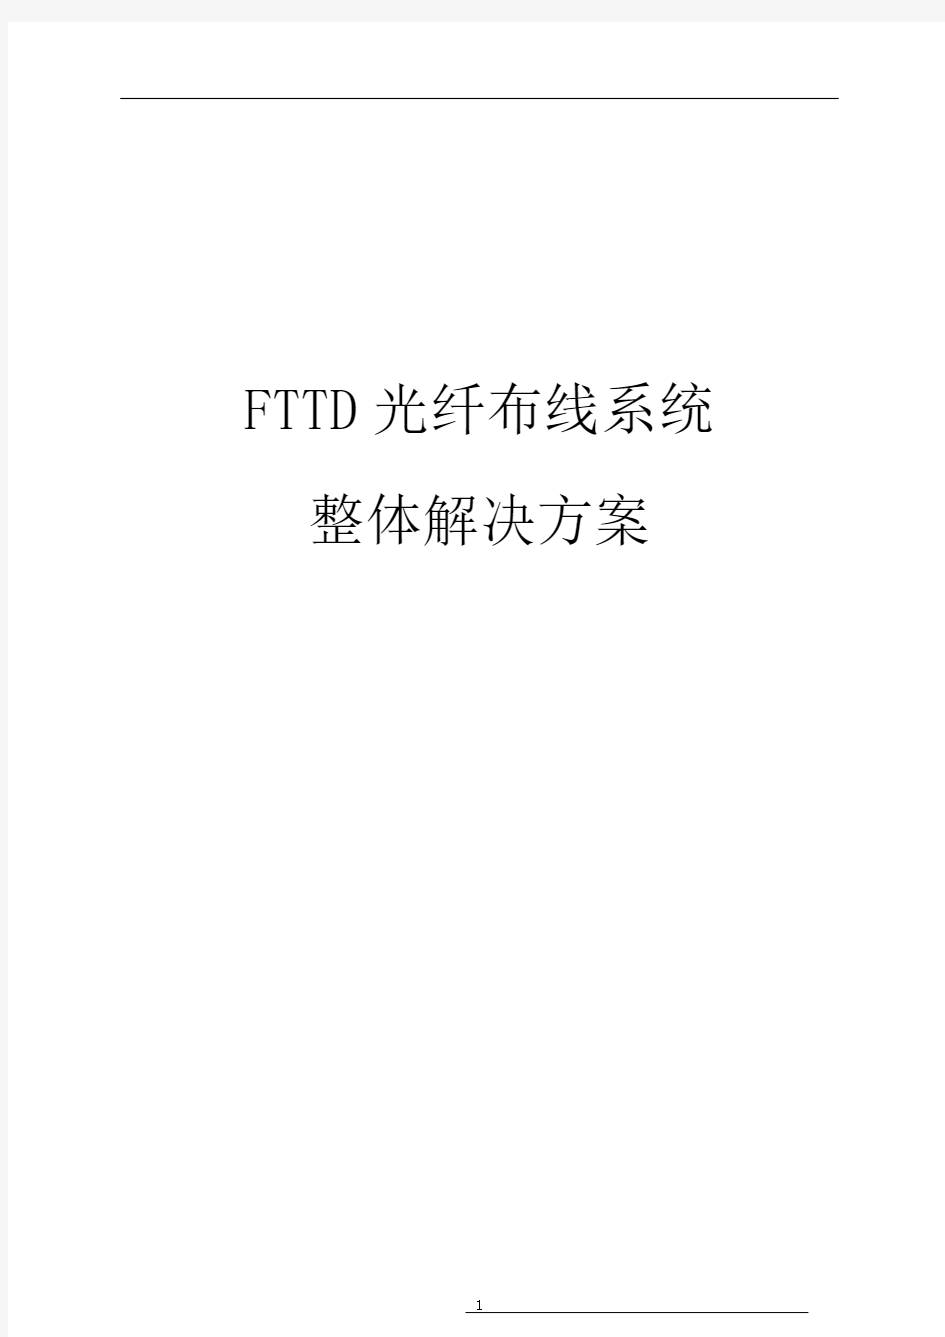 FTTD光纤到桌面布线系统解决方案